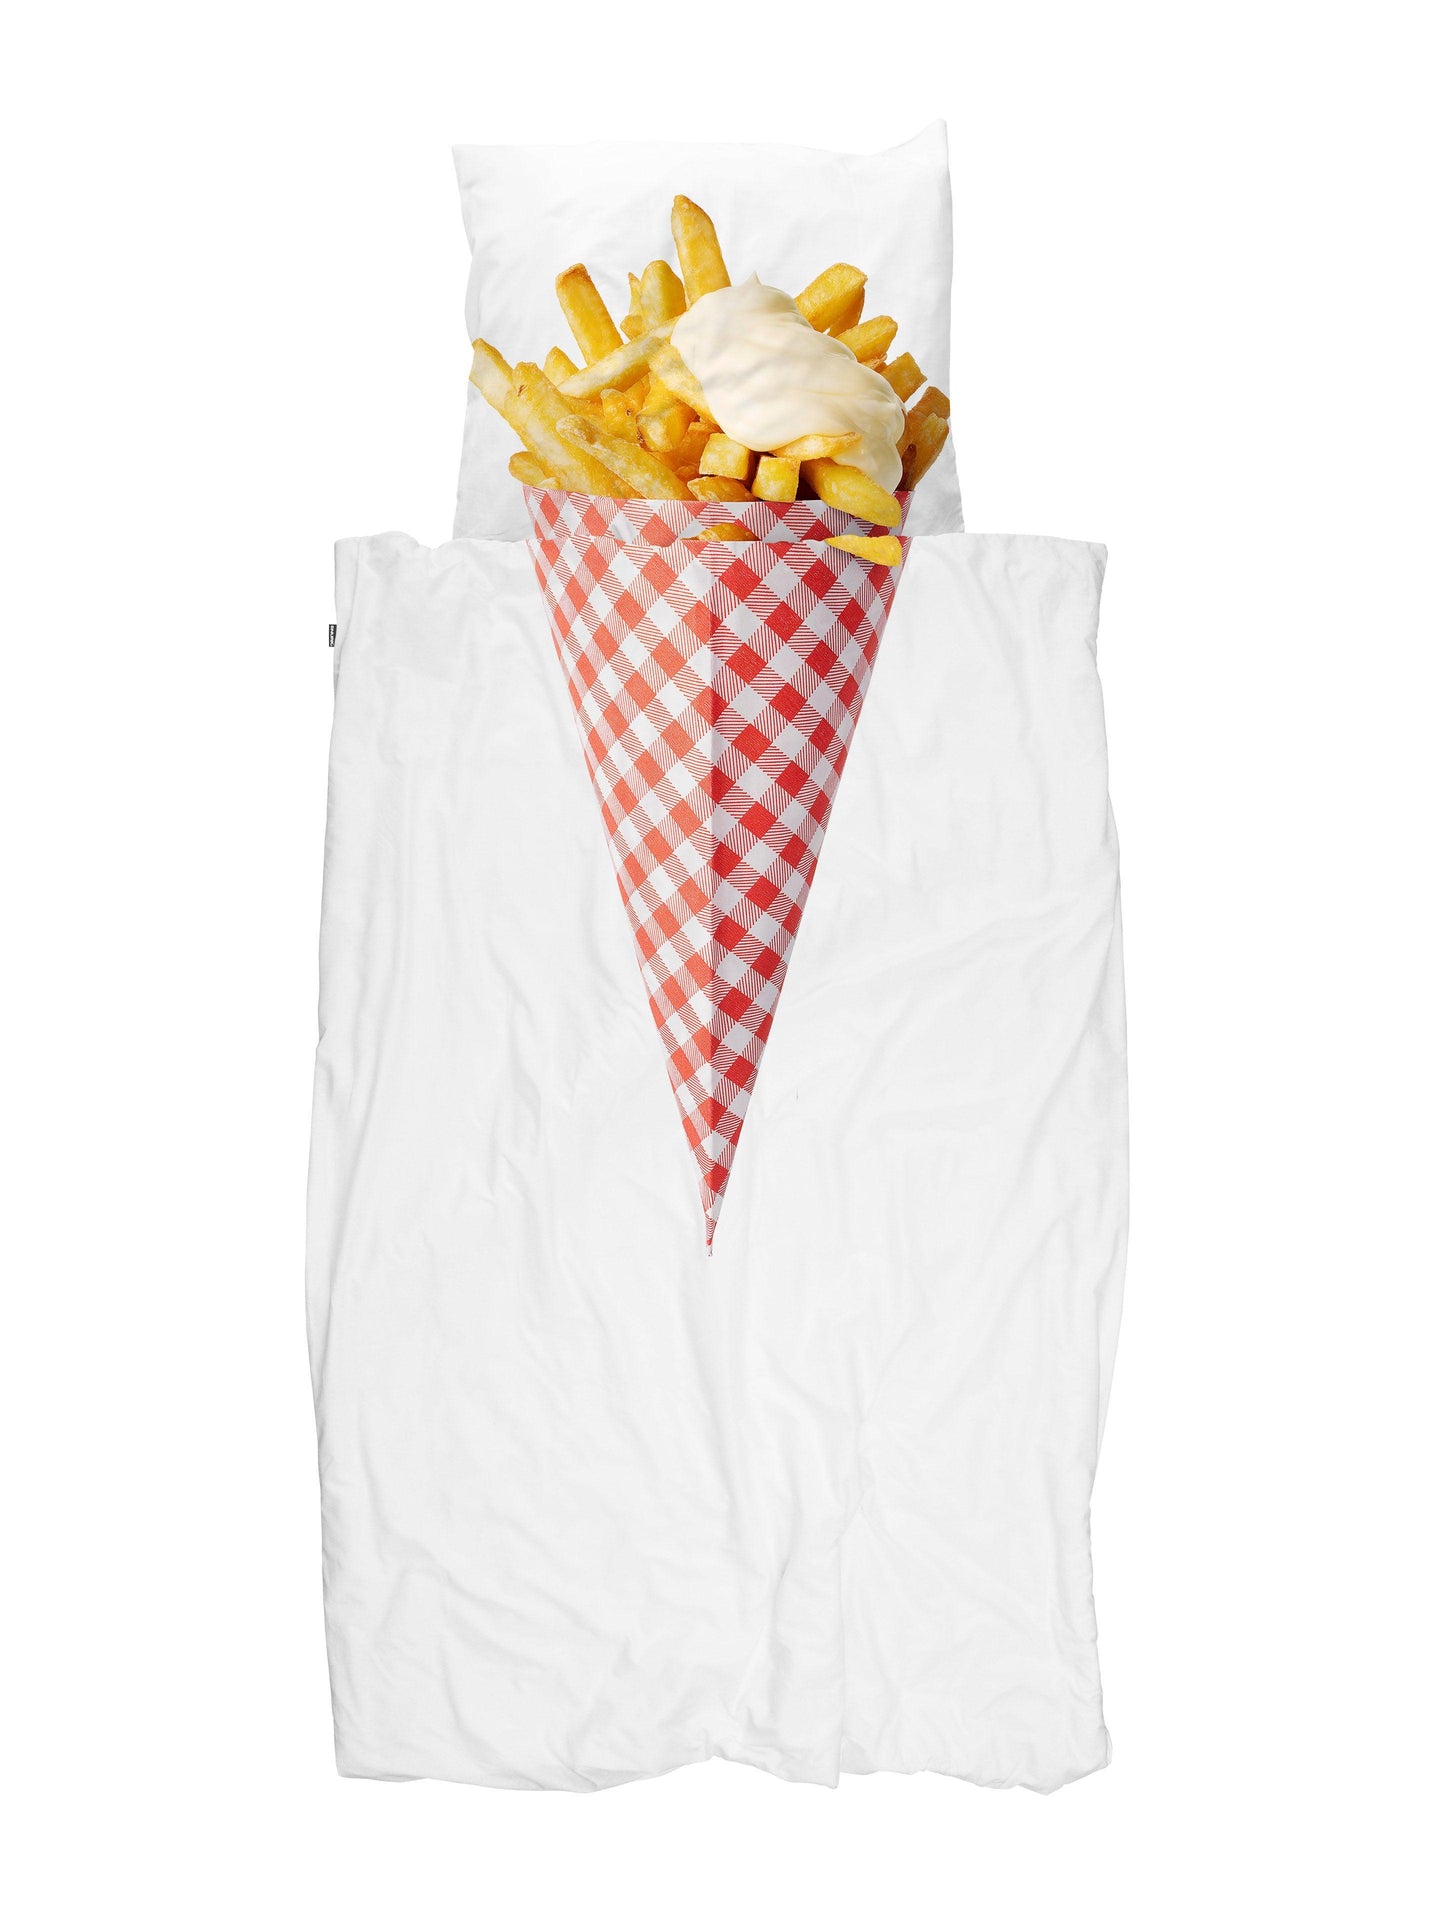 Fries dekbedovertrek - SNURK